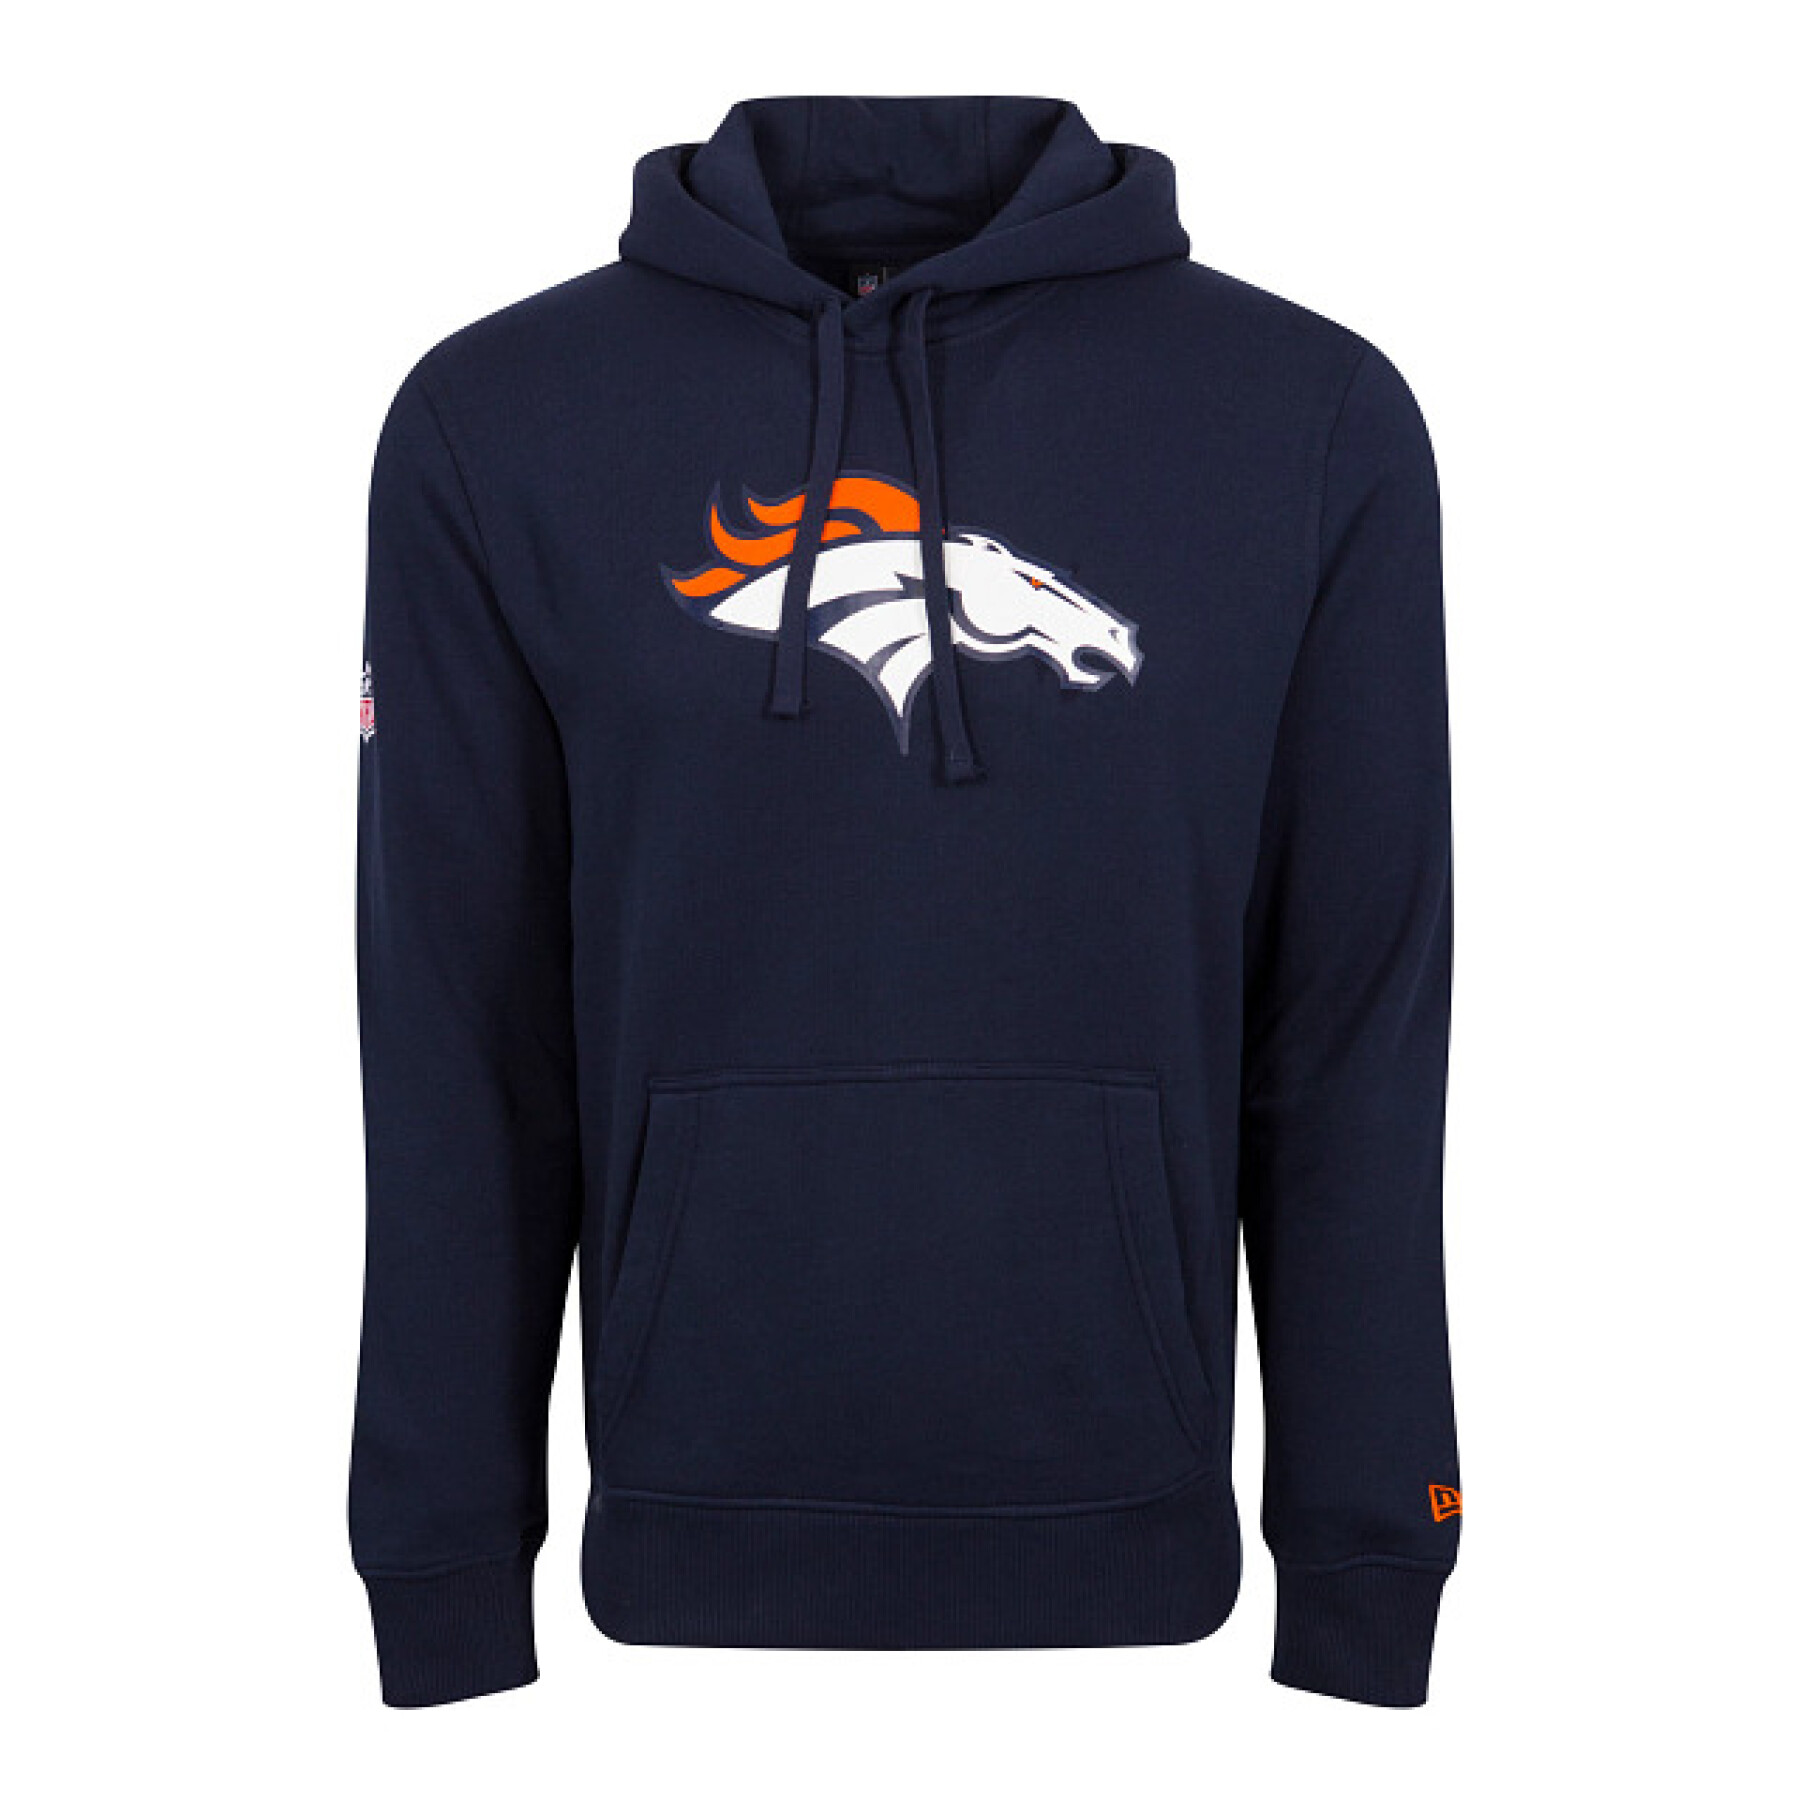 Hooded sweatshirt Denver Broncos NFL